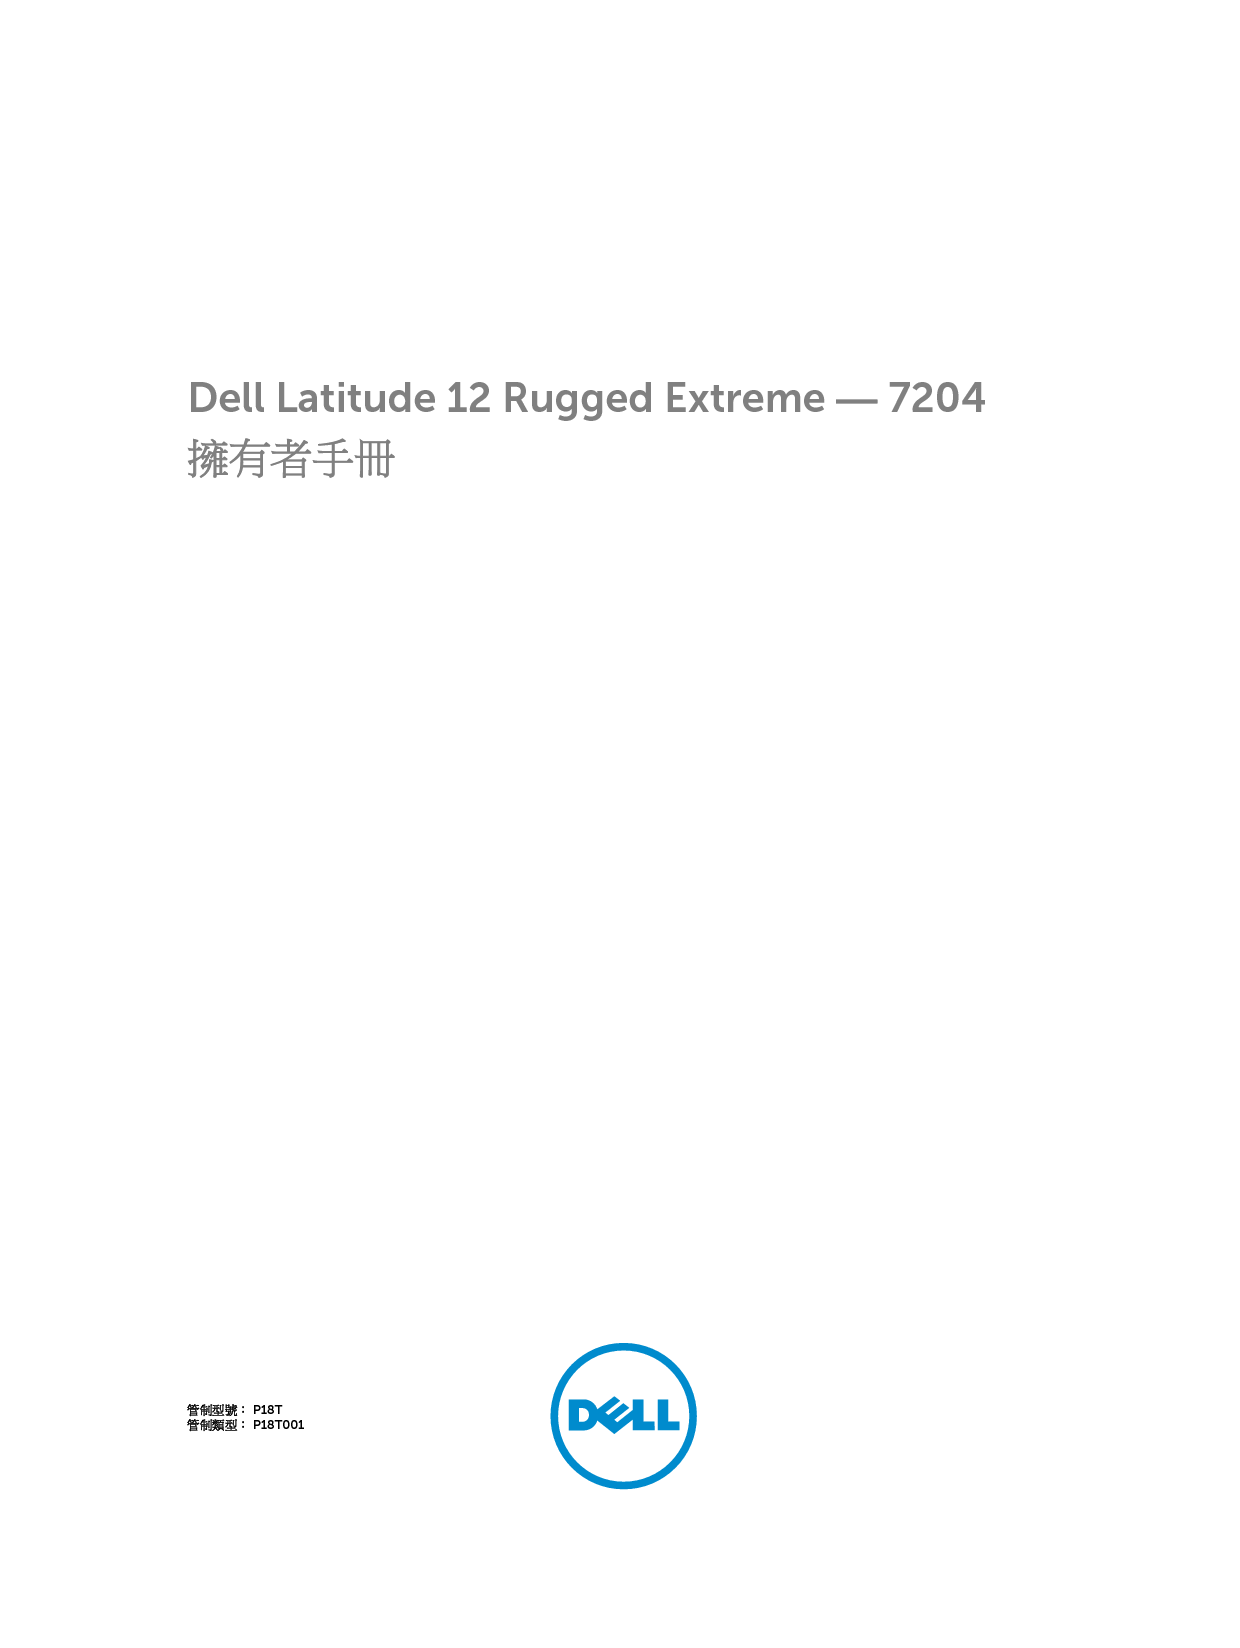 戴尔 Dell Latitude 7204 繁体 用户手册 封面